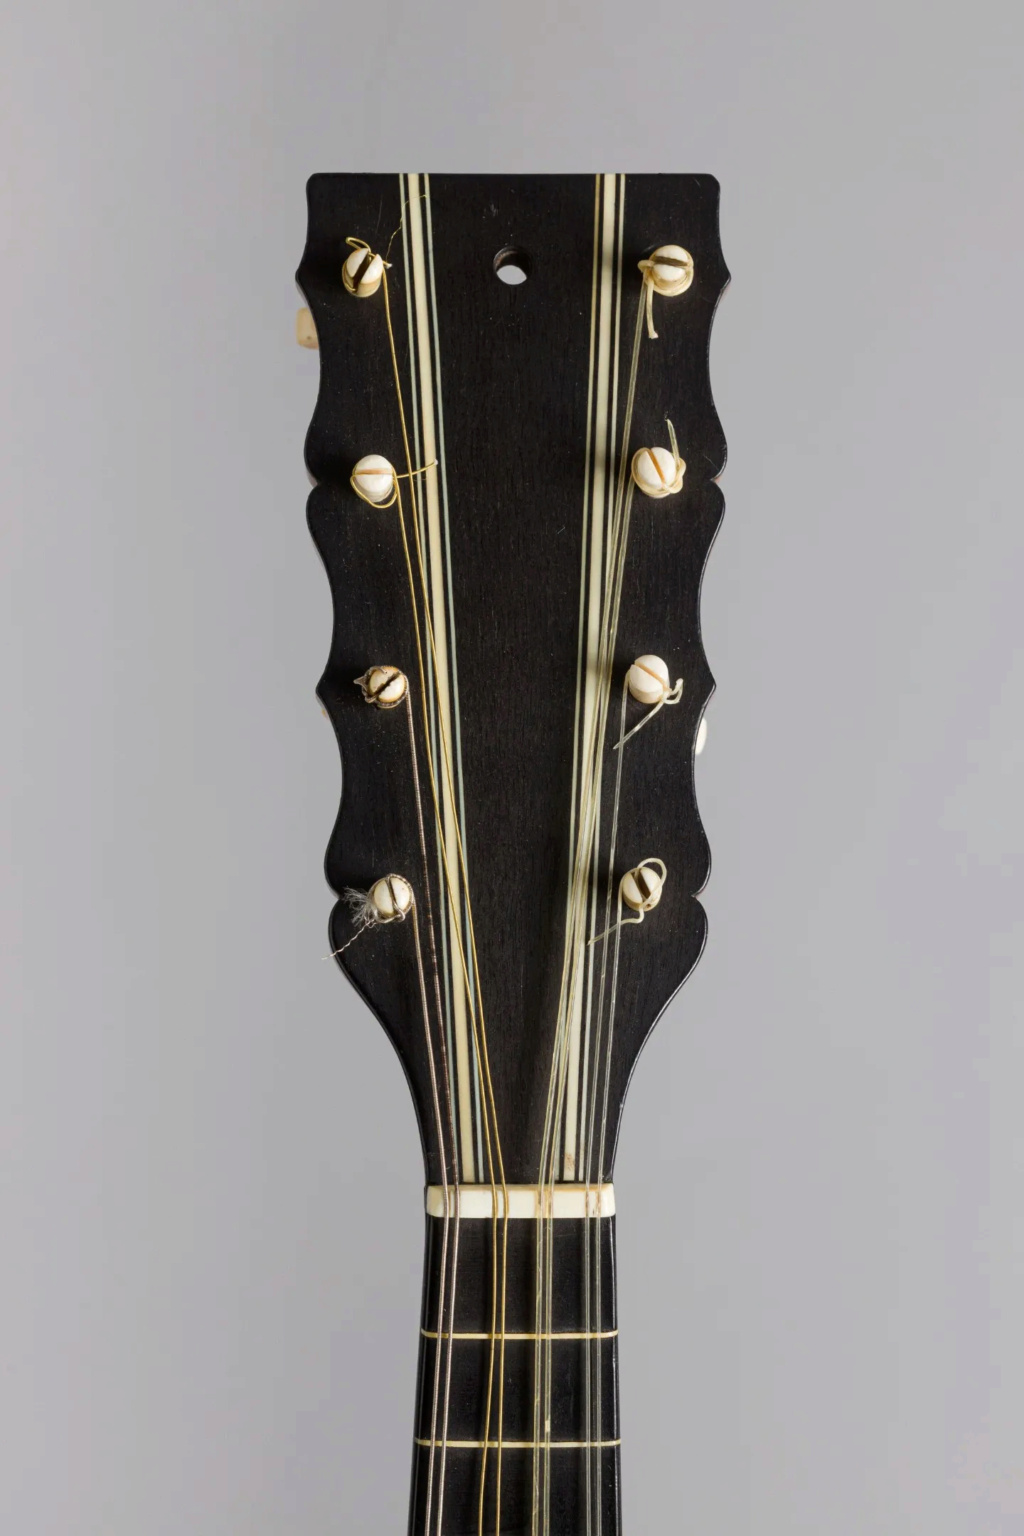 La mandoline au XVIIIe siècle Telech14